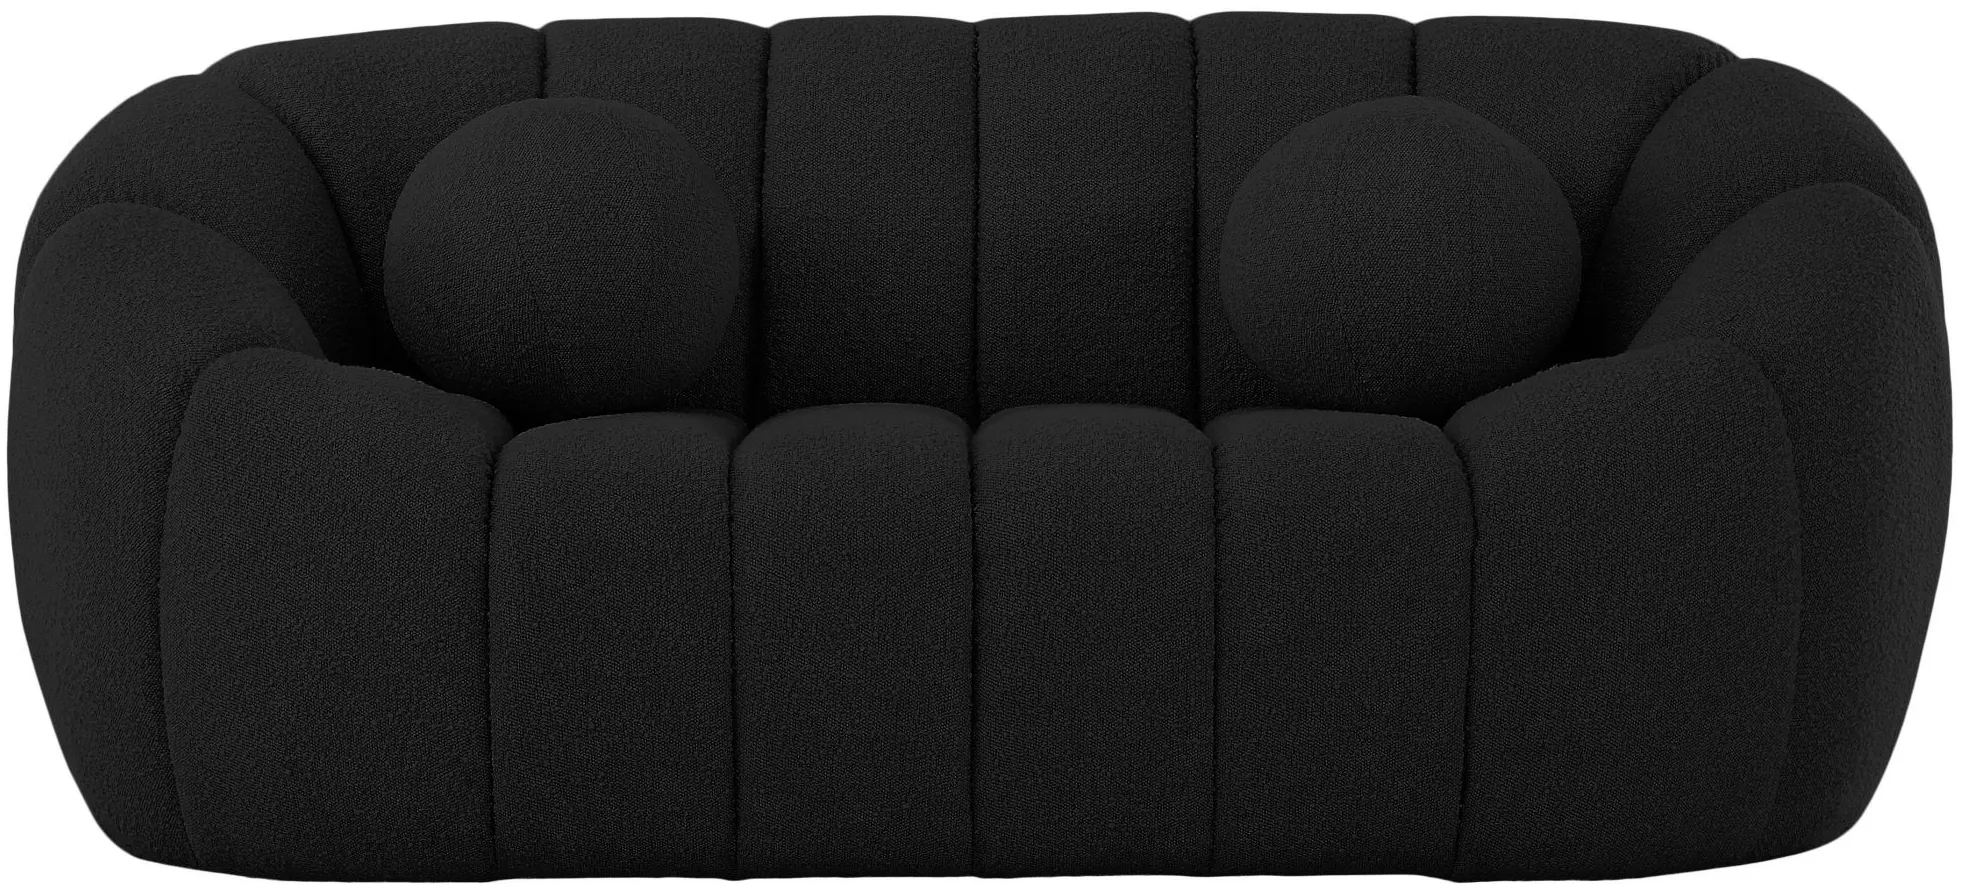 Elijah Boucle Fabric Loveseat in Black by Meridian Furniture